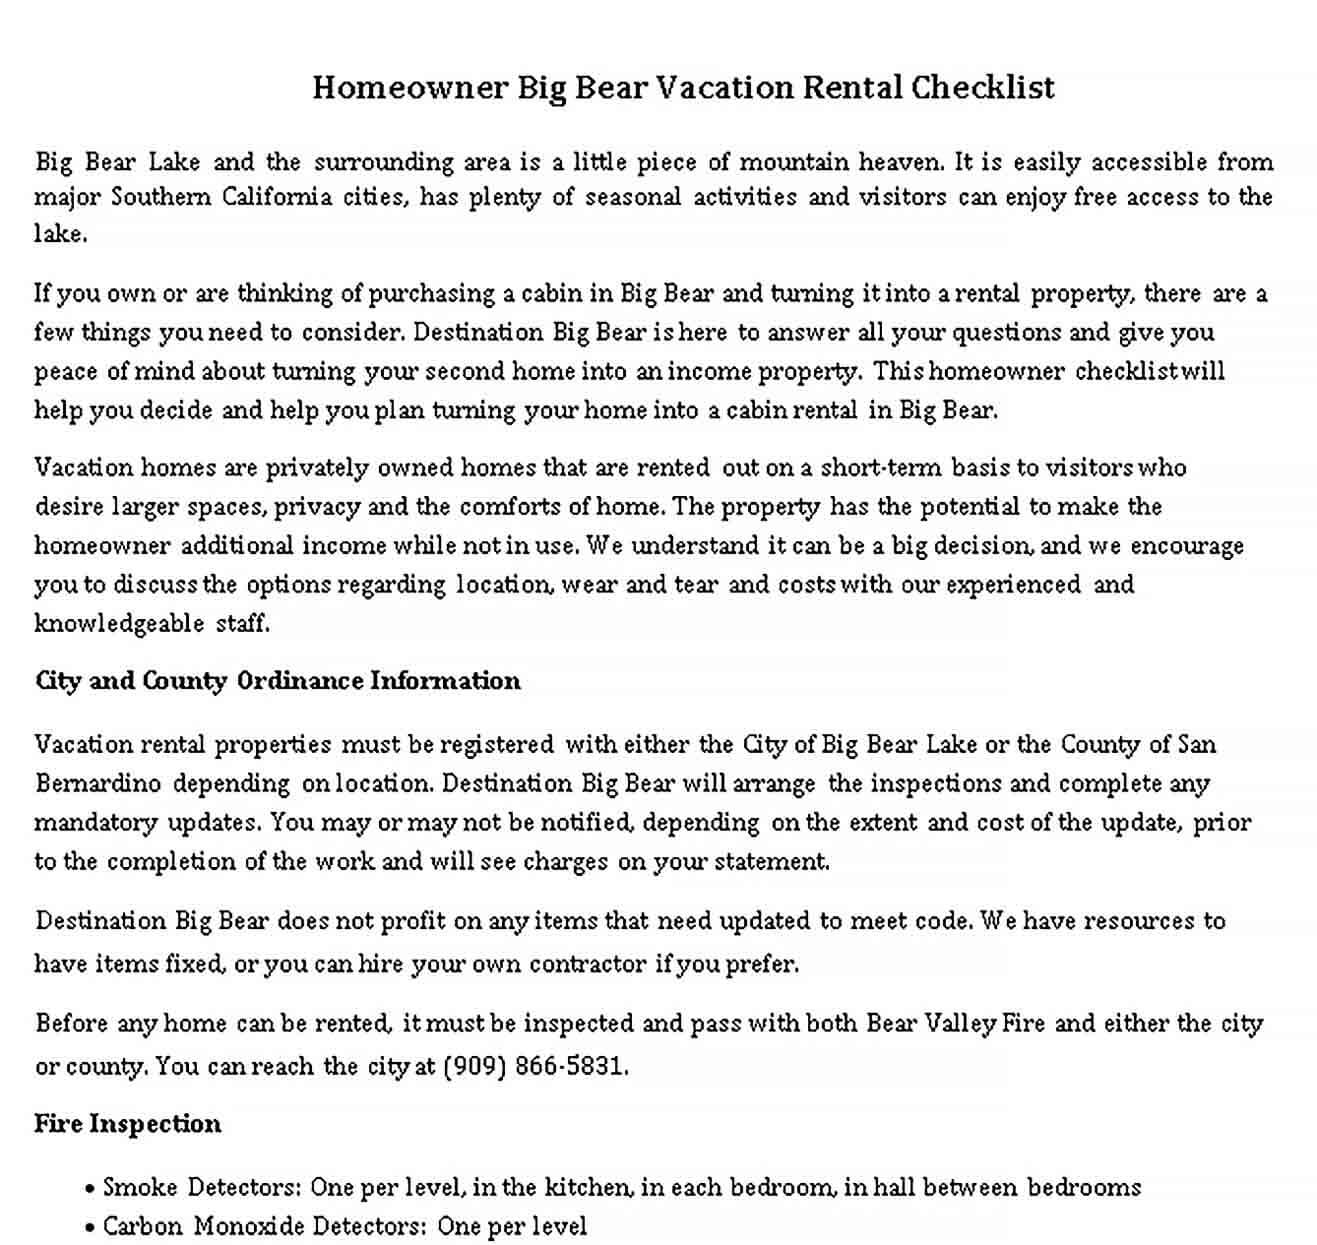 Sample Vacation Rental Checklist